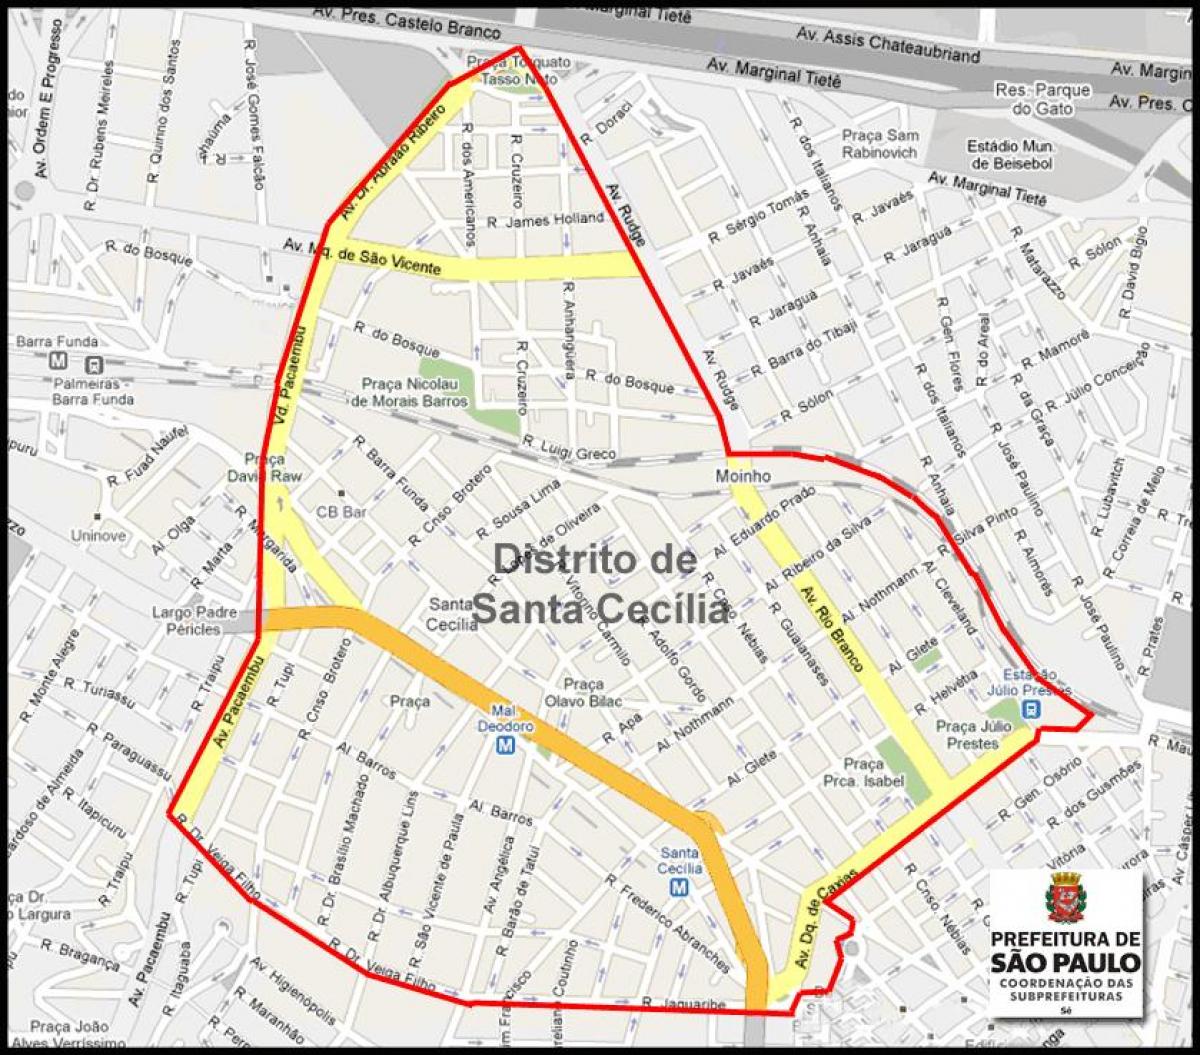 Kort over Santa Cecília São Paulo